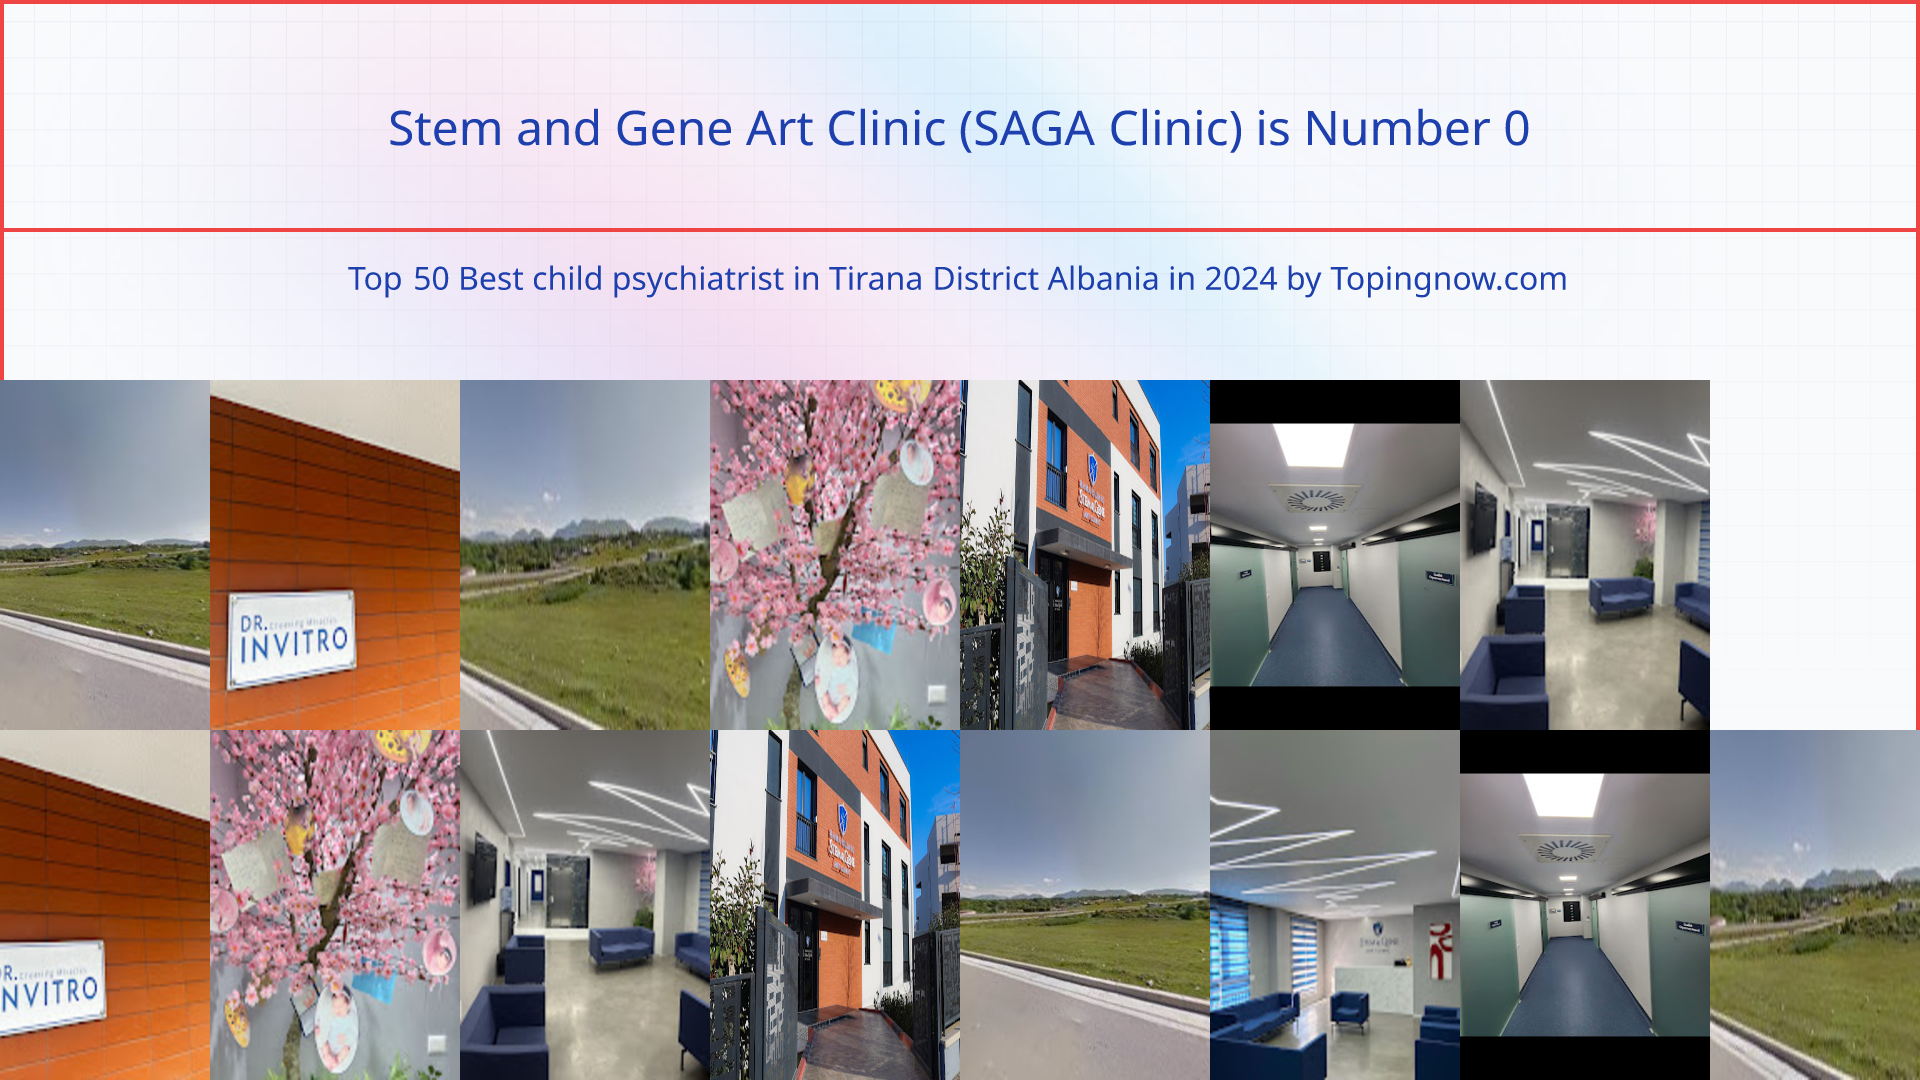 Stem and Gene Art Clinic (SAGA Clinic): Top 50 Best child psychiatrist in Tirana District Albania in 2024